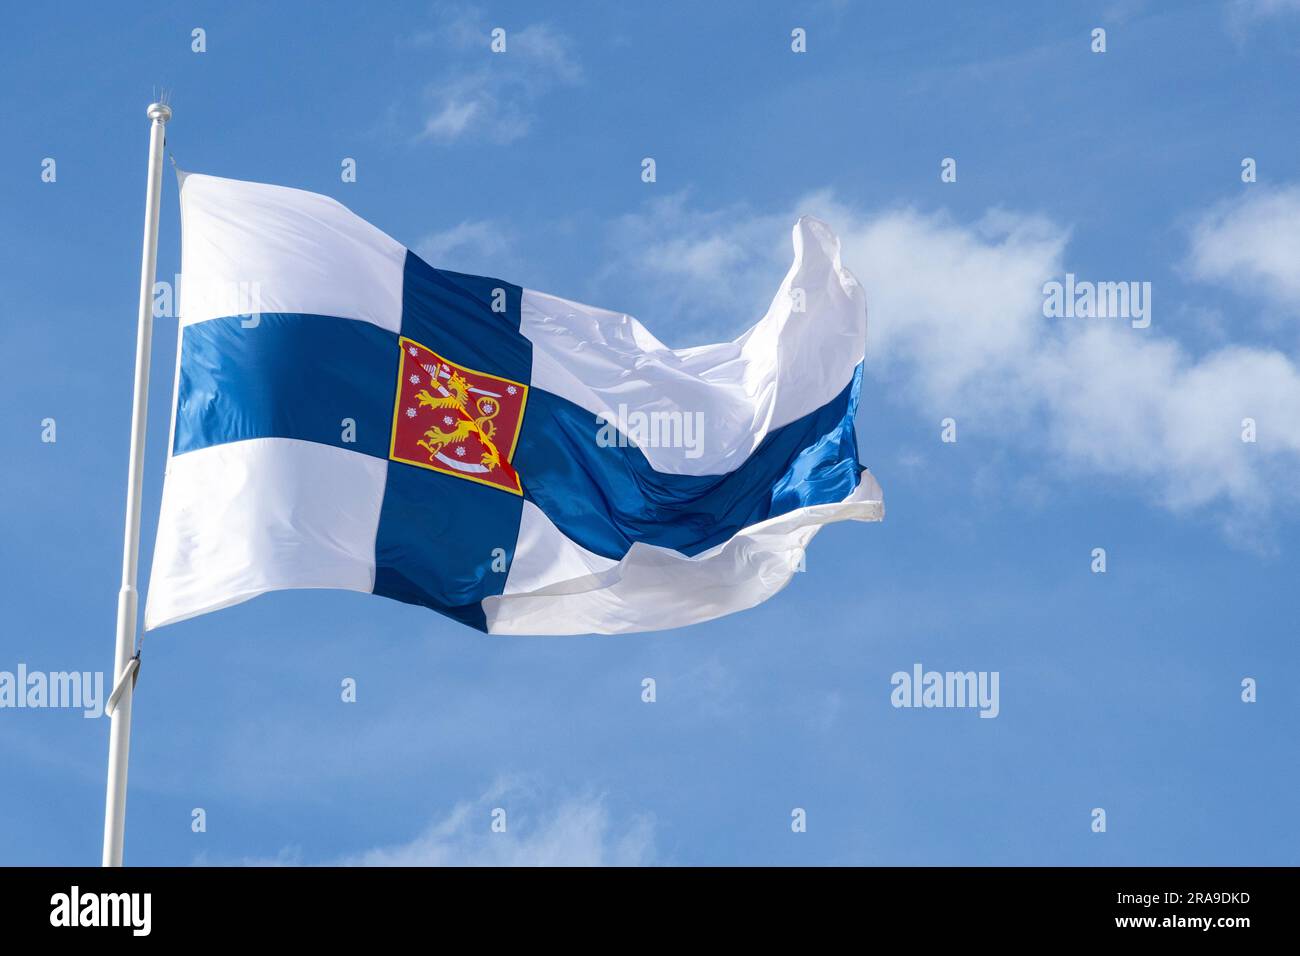 Suomen valtiolippu liehuu Valtioneuvoston linnassa|||drapeau d'Etat finlandais volant à Helsinki Banque D'Images